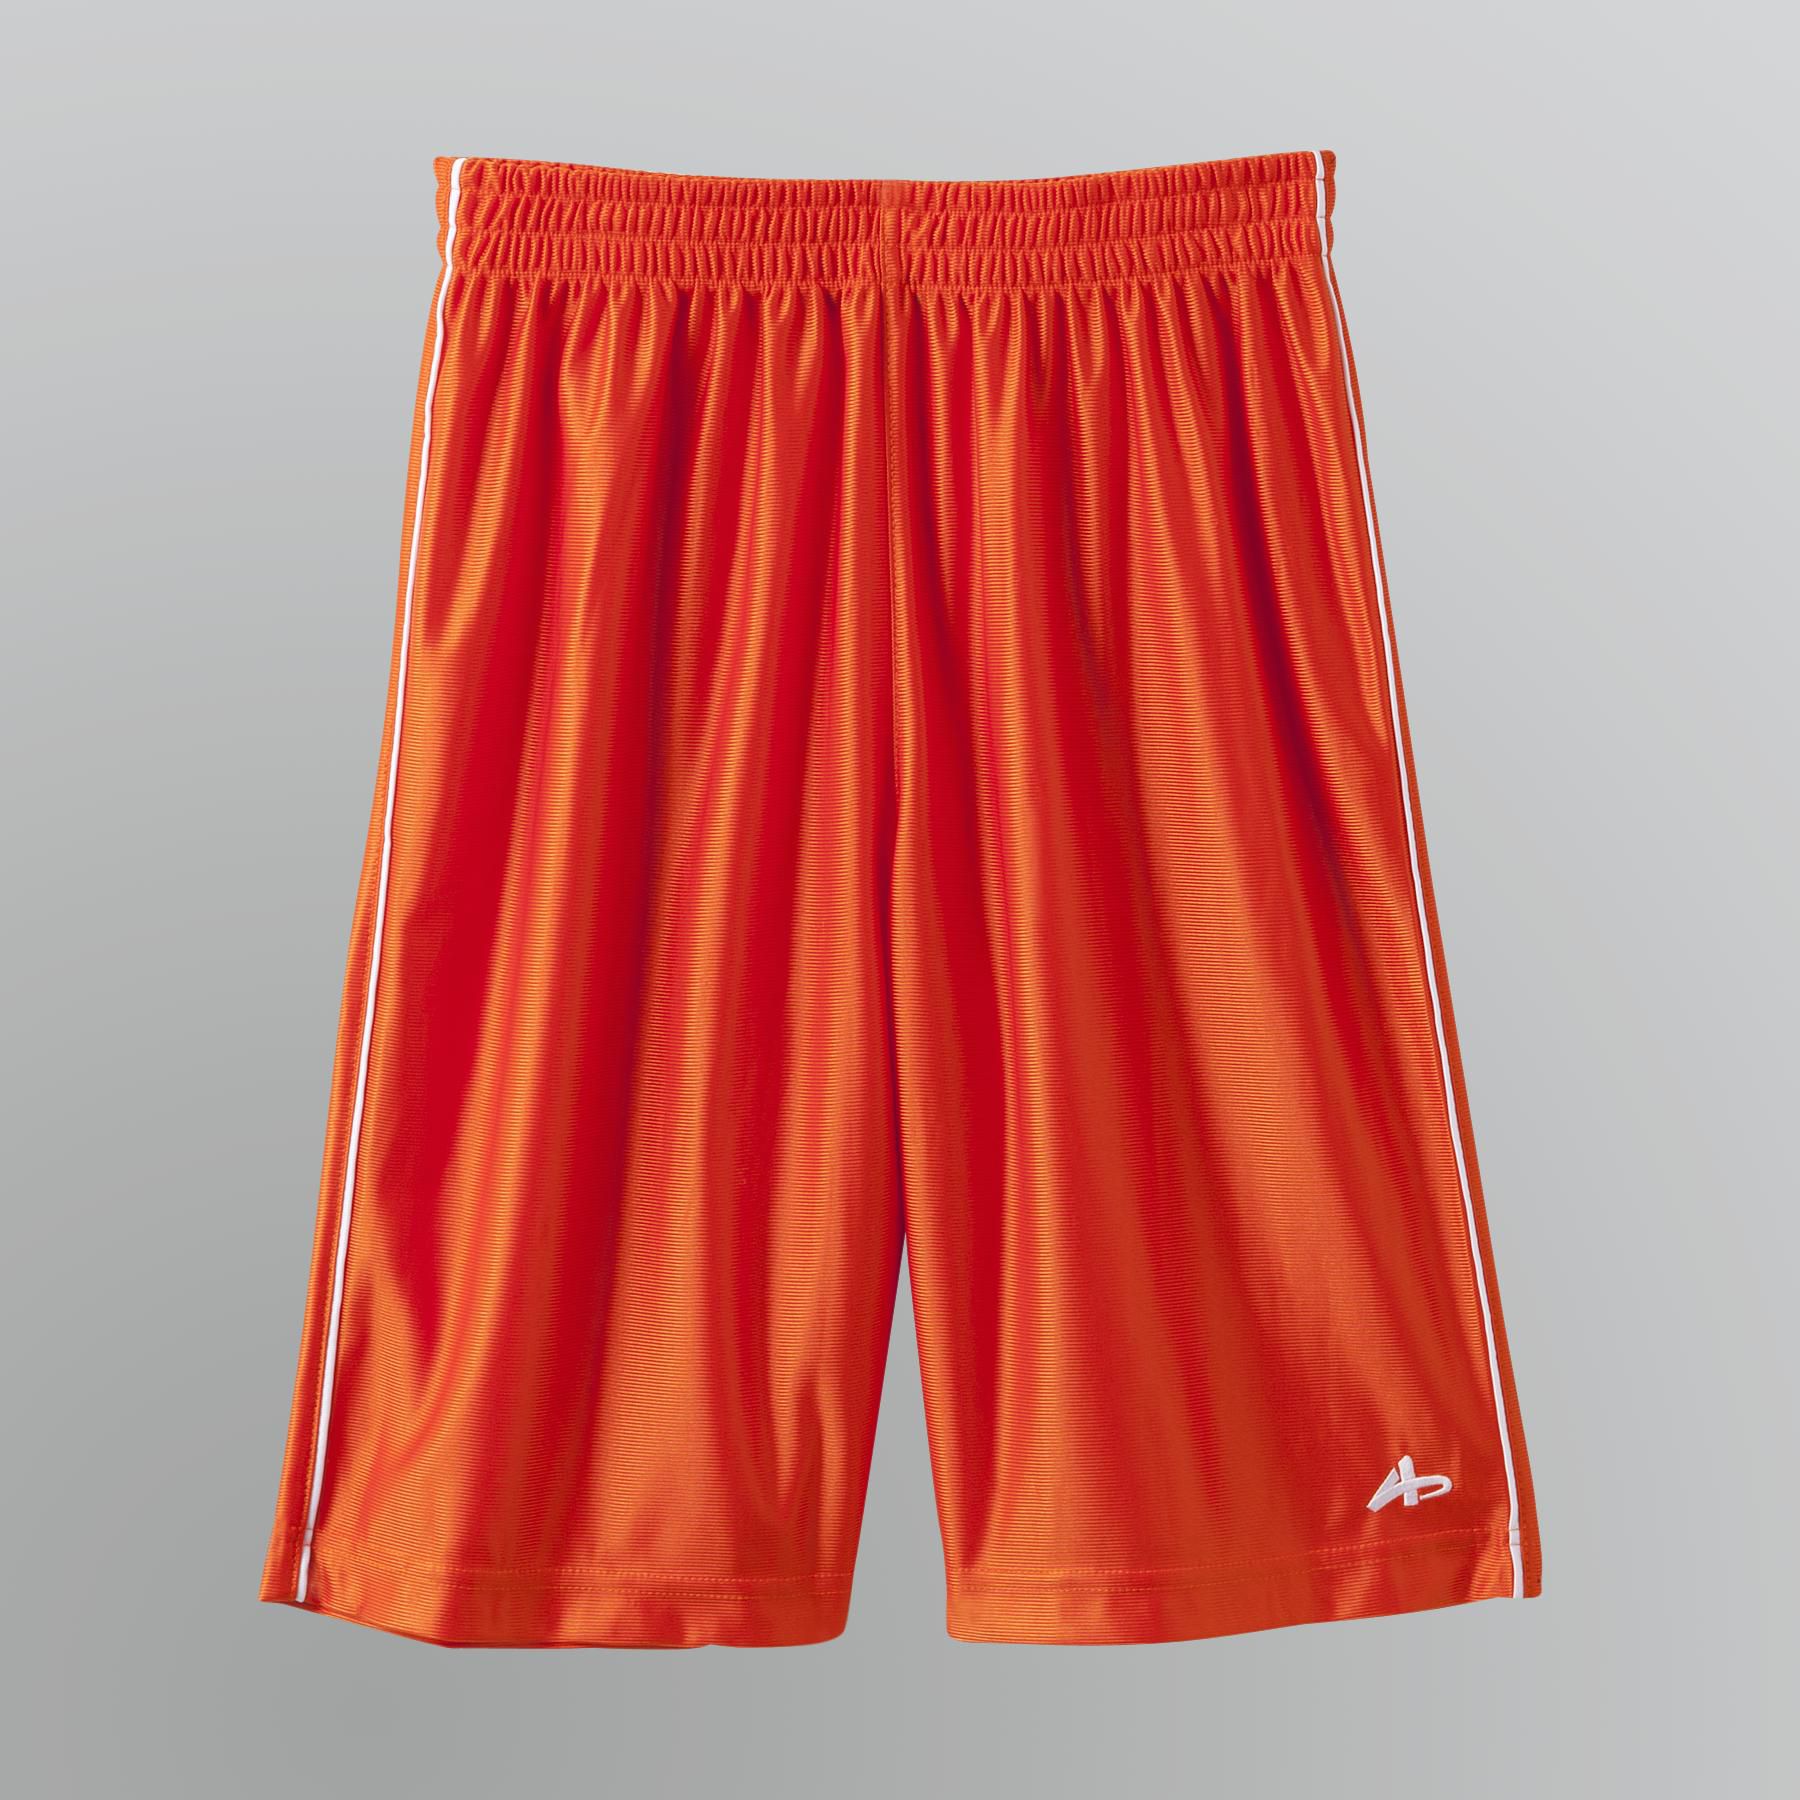 Athletech Boy's Athletic Shorts